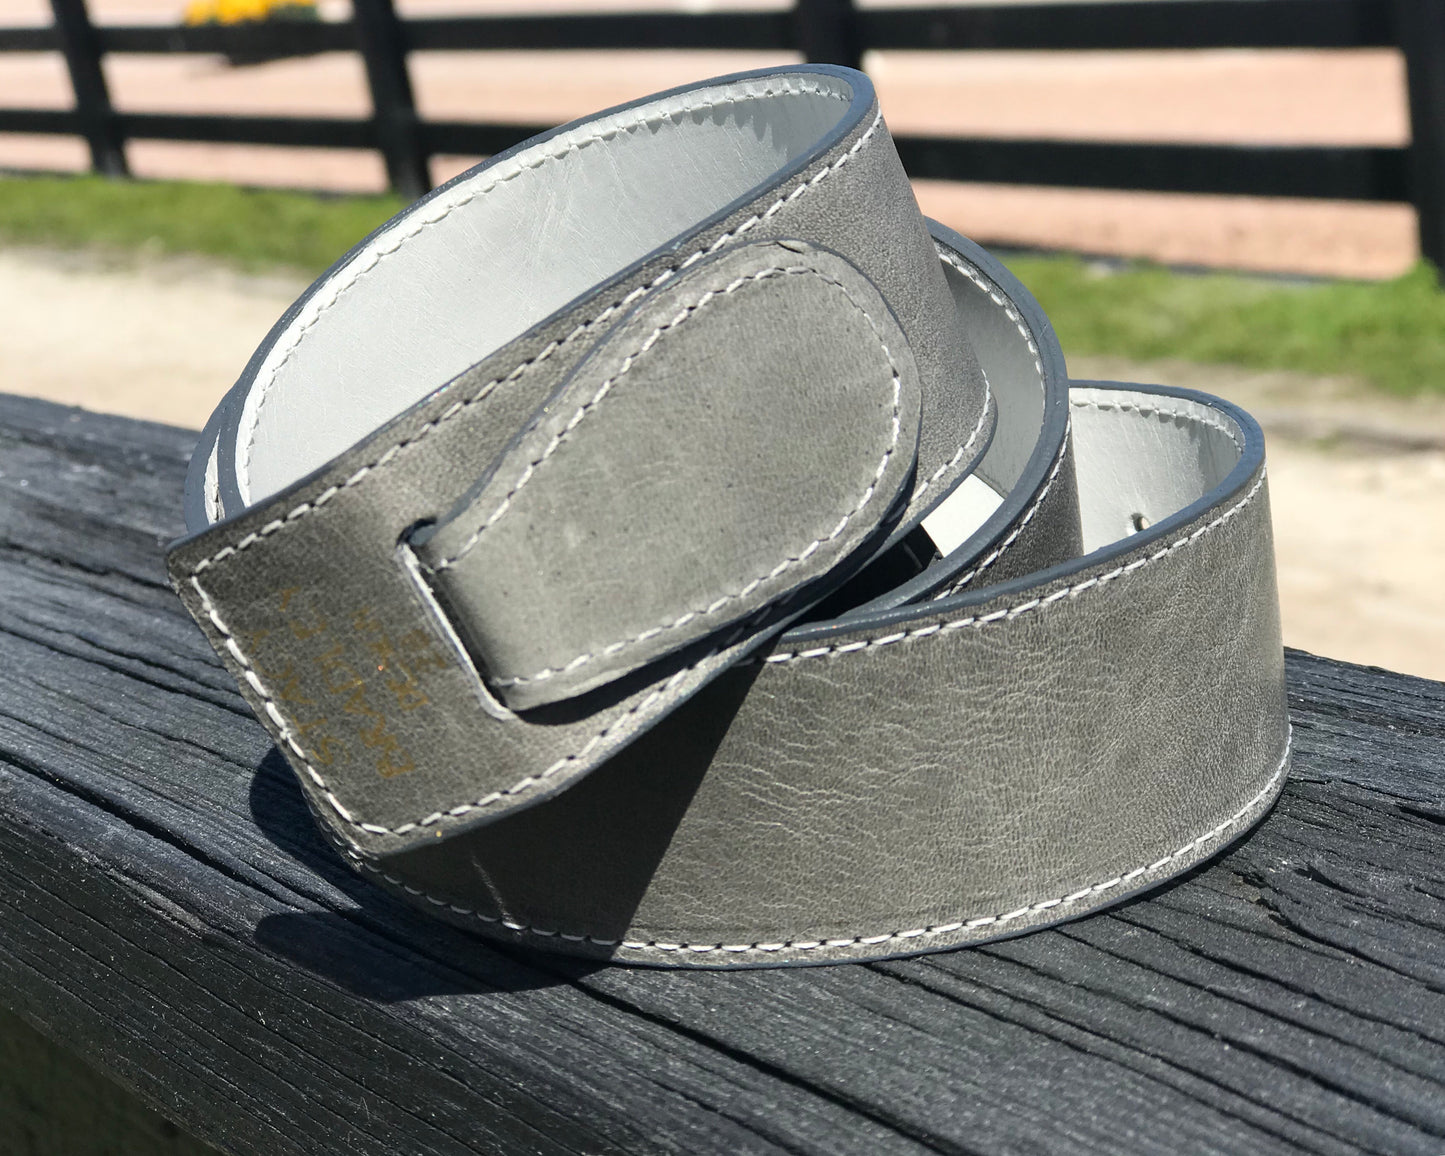 Reversible White and Gray belt.